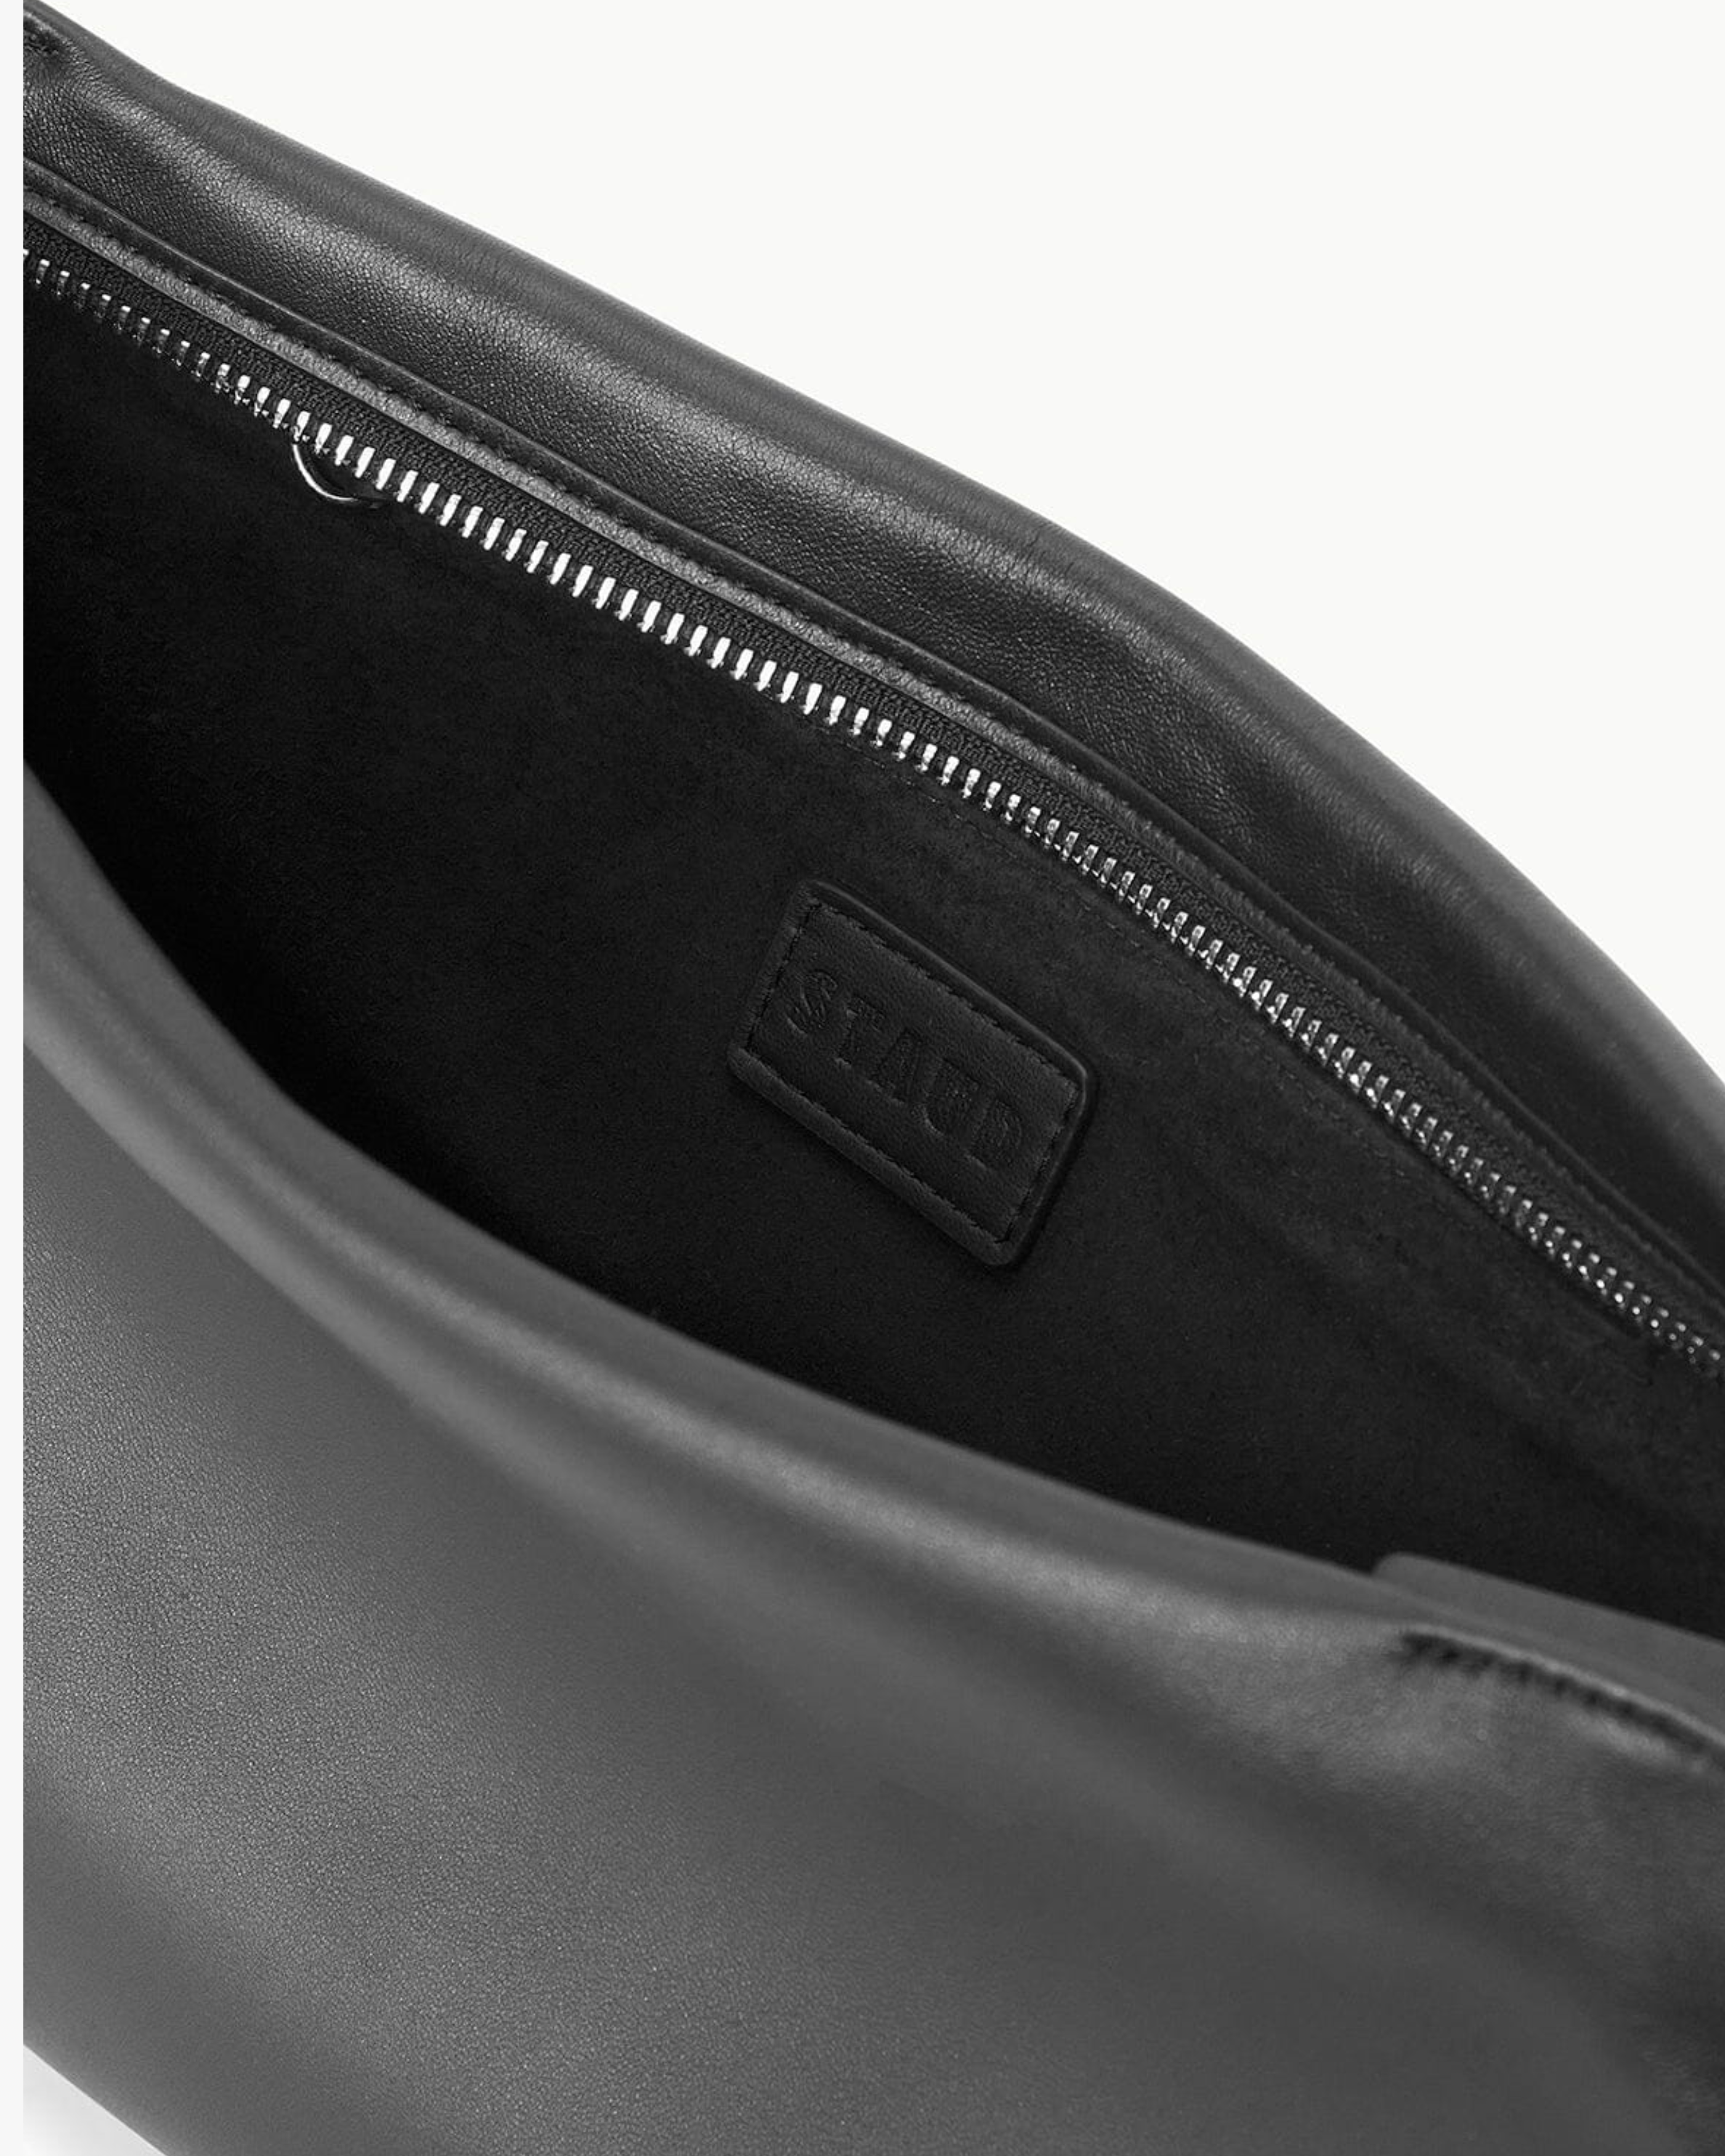 Staud Vivi Shoulder Bag in Black